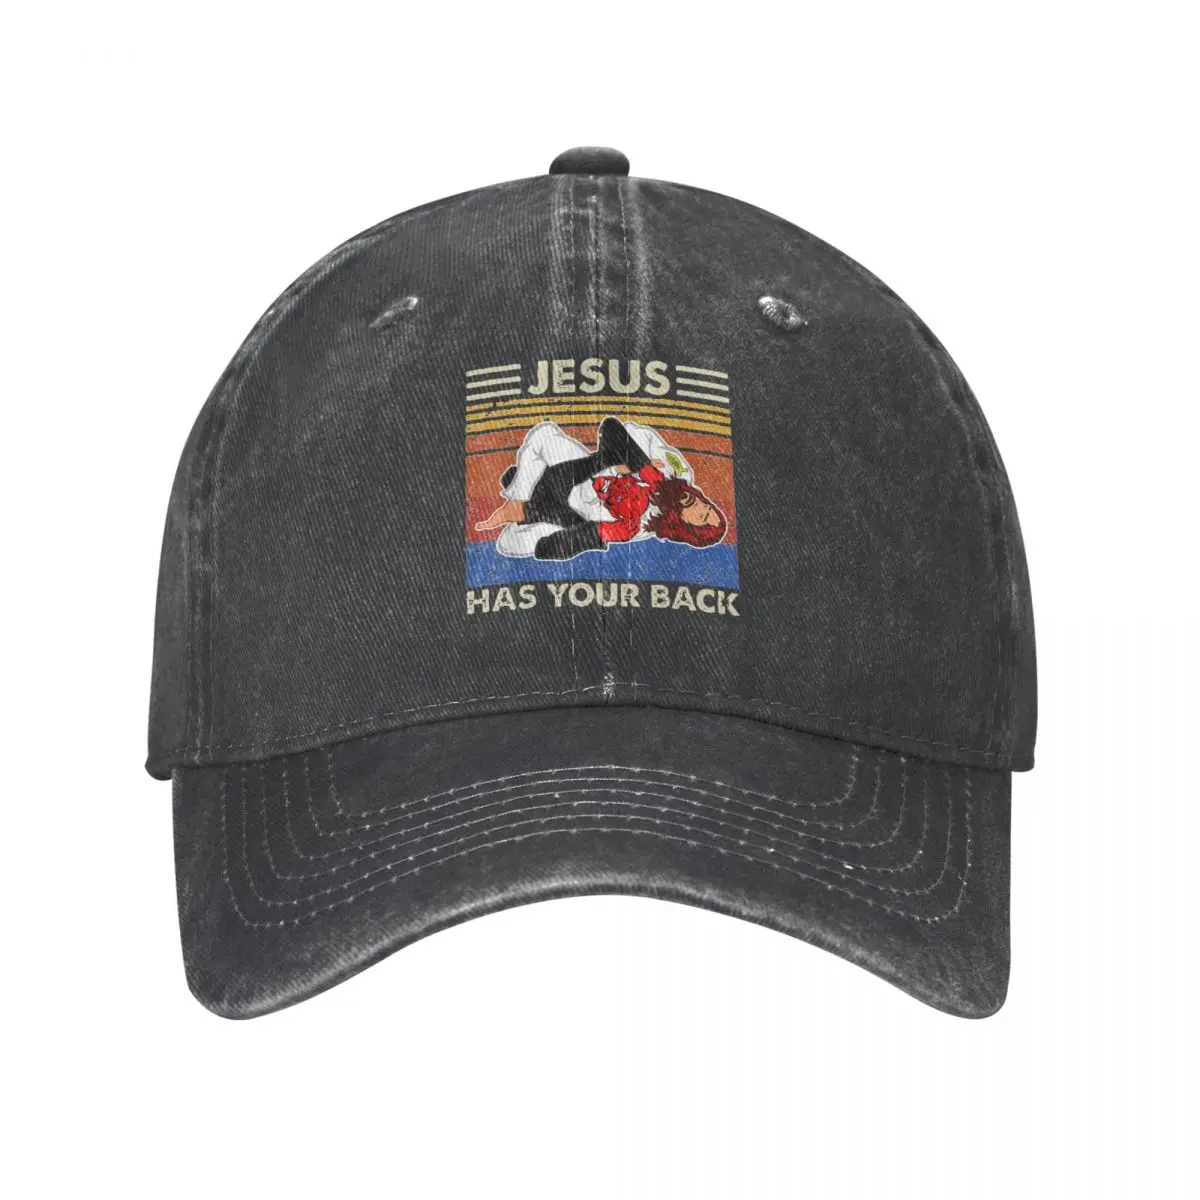 

Jesus Has Your Back Jiu Jitsu Baseball Caps Retro Distressed Cotton Sun Cap Men Women Outdoor Activities Adjustable Fit Caps Hat